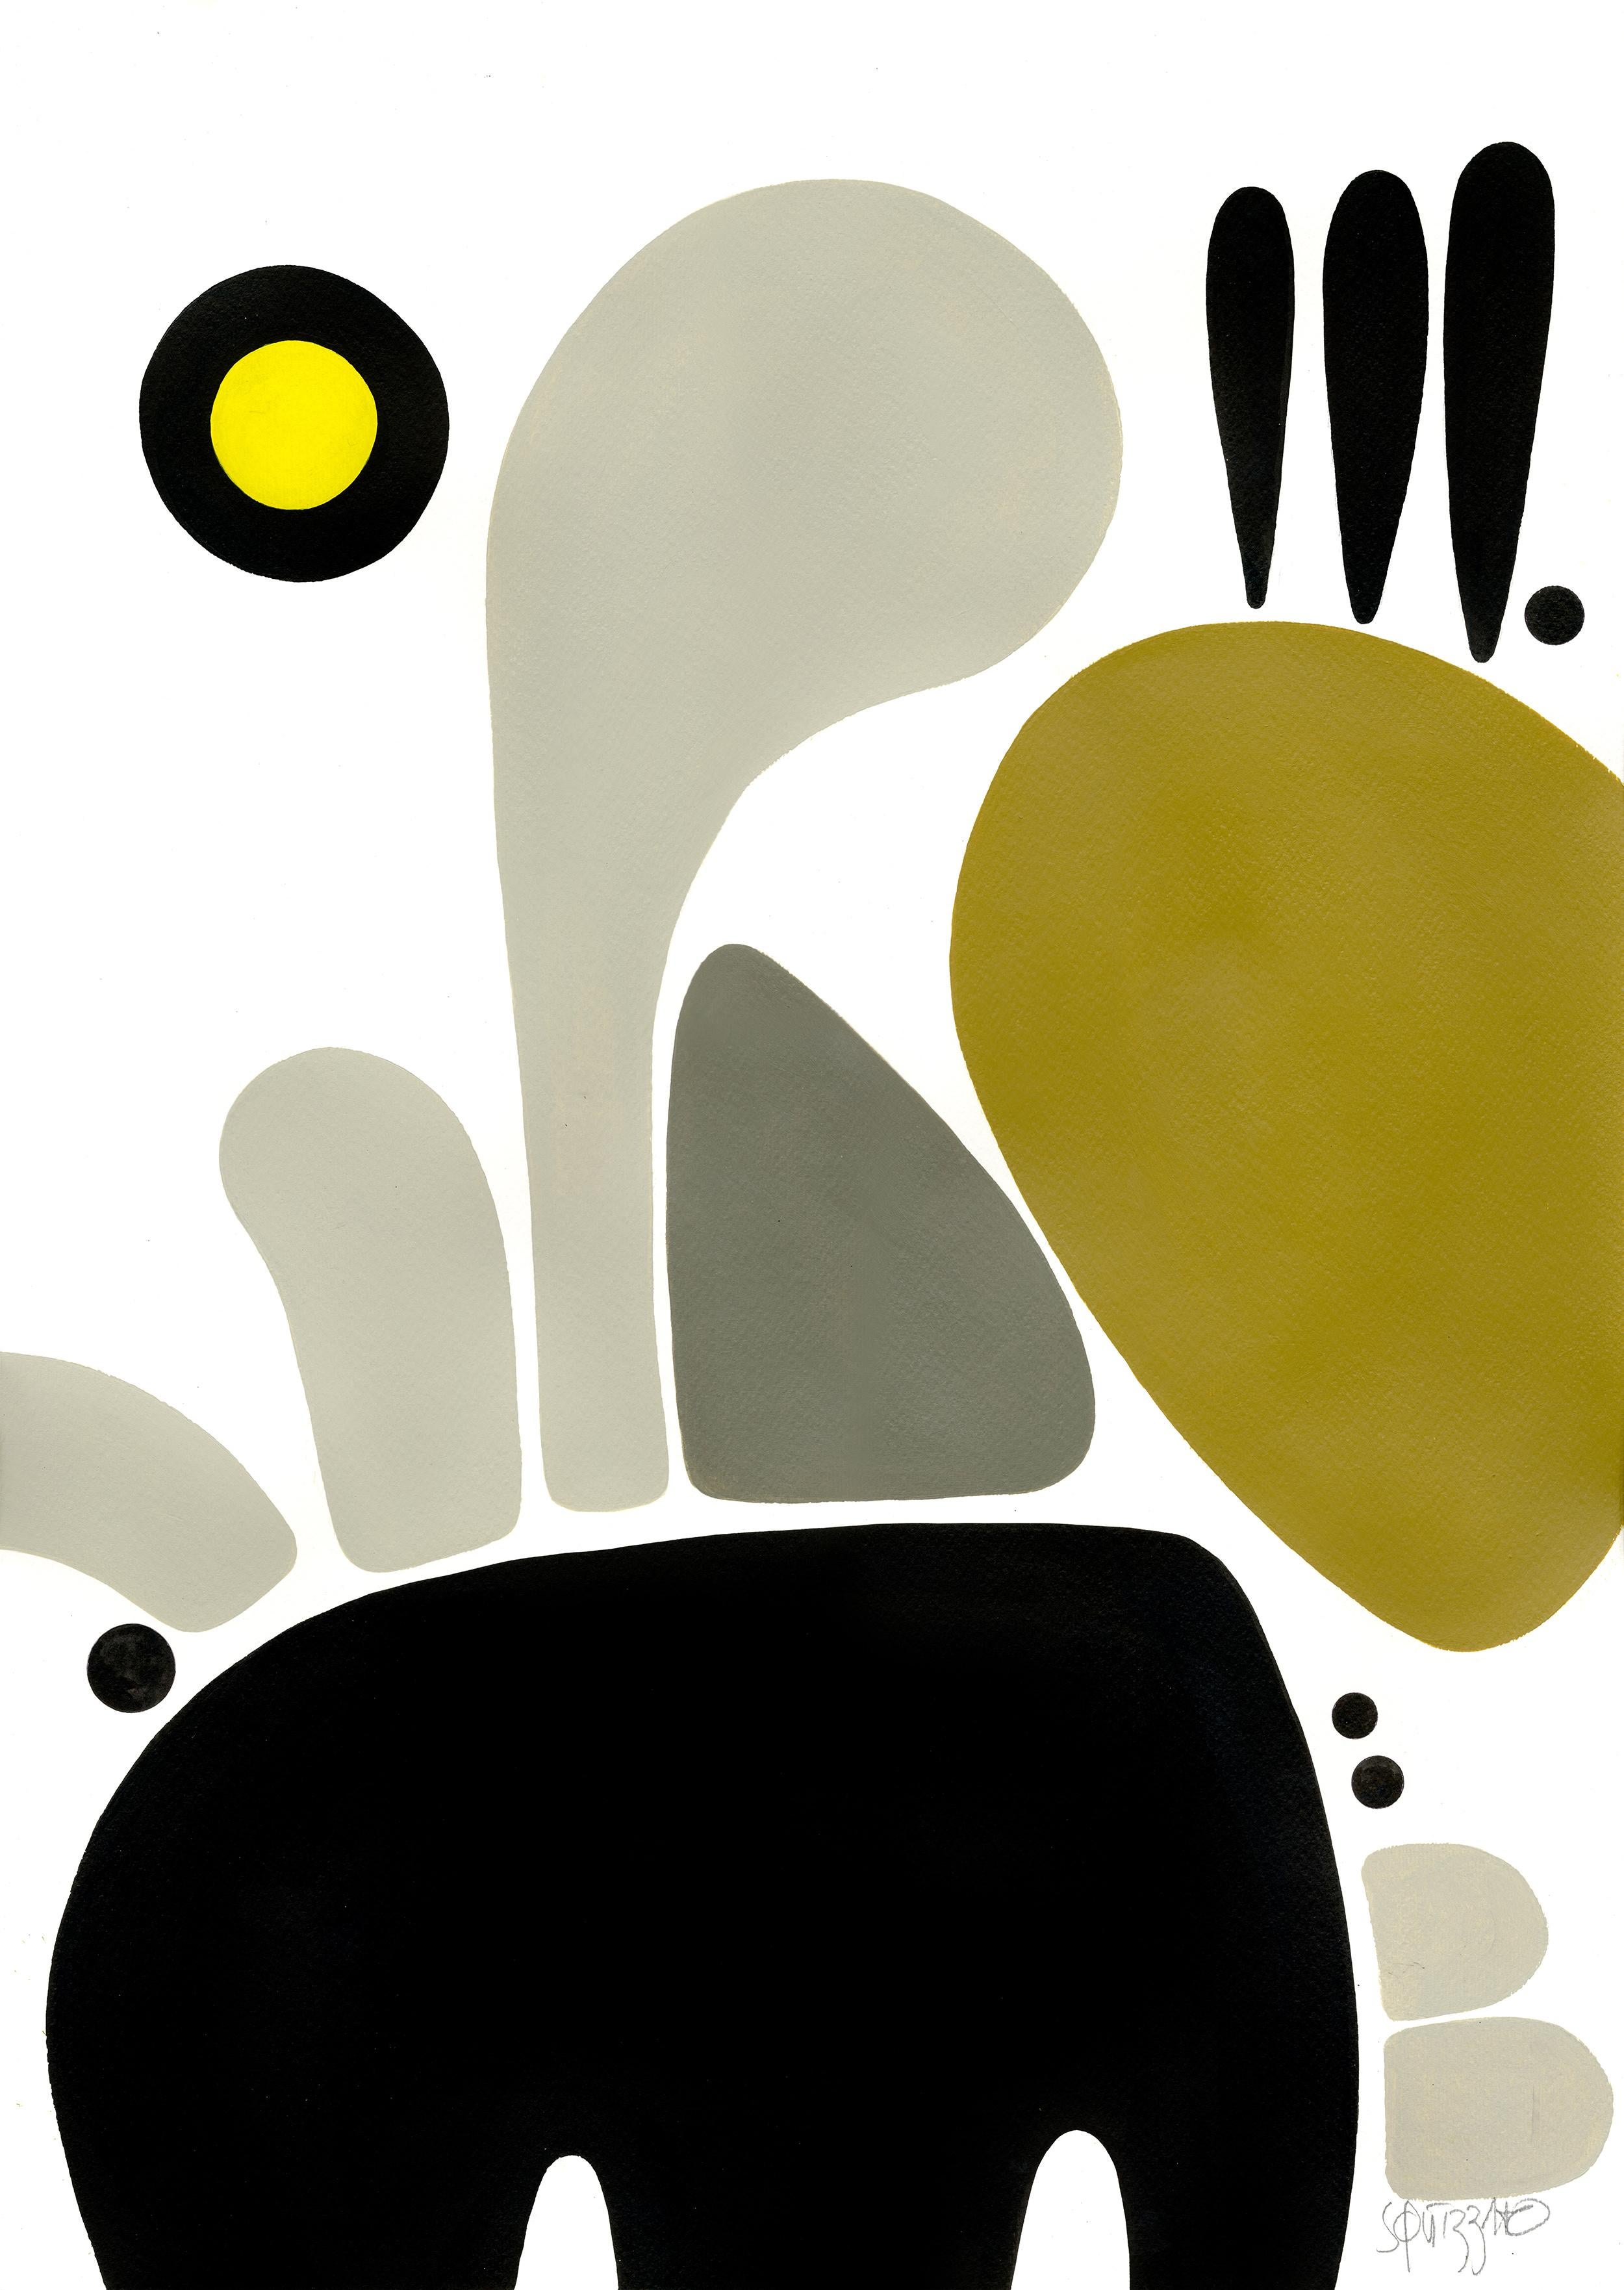 Antony Squizzato Abstract Painting - "Elefaon", Neue Constructivist Abstract Character Acrylic Painting